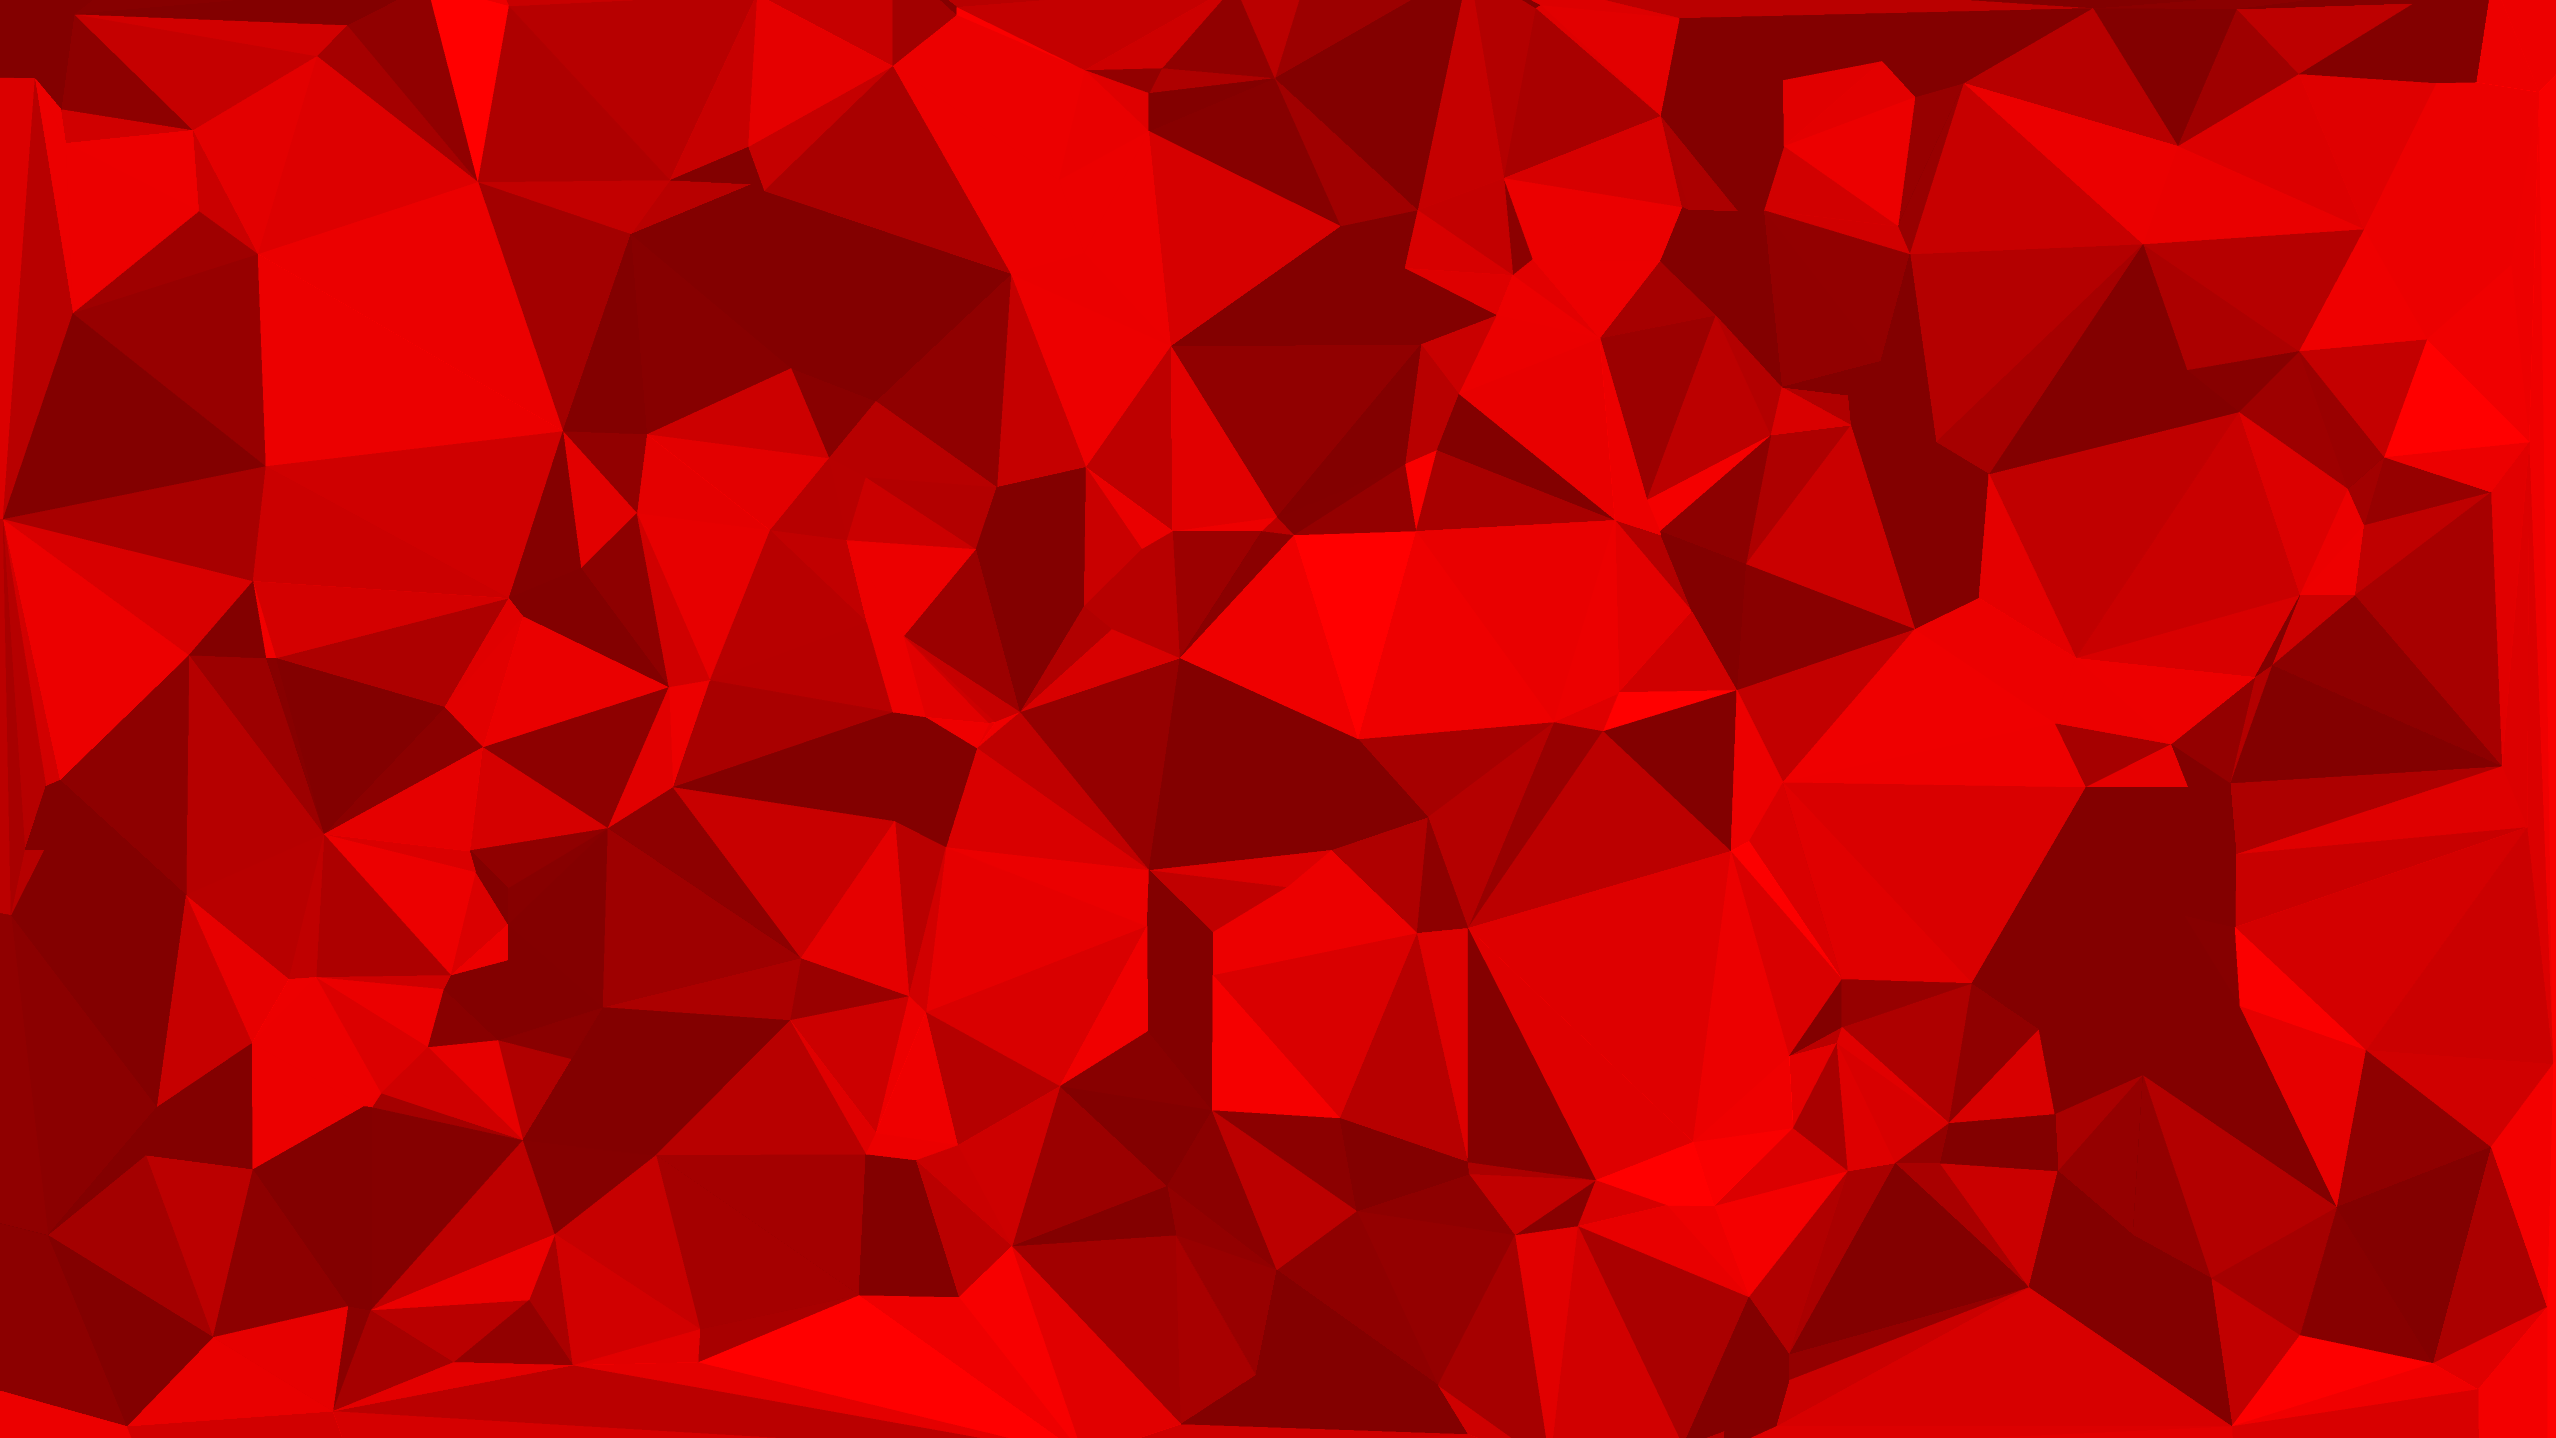 UHD Red Wallpapers - Los mejores fondos UHD Red gratis - WallpaperAccess